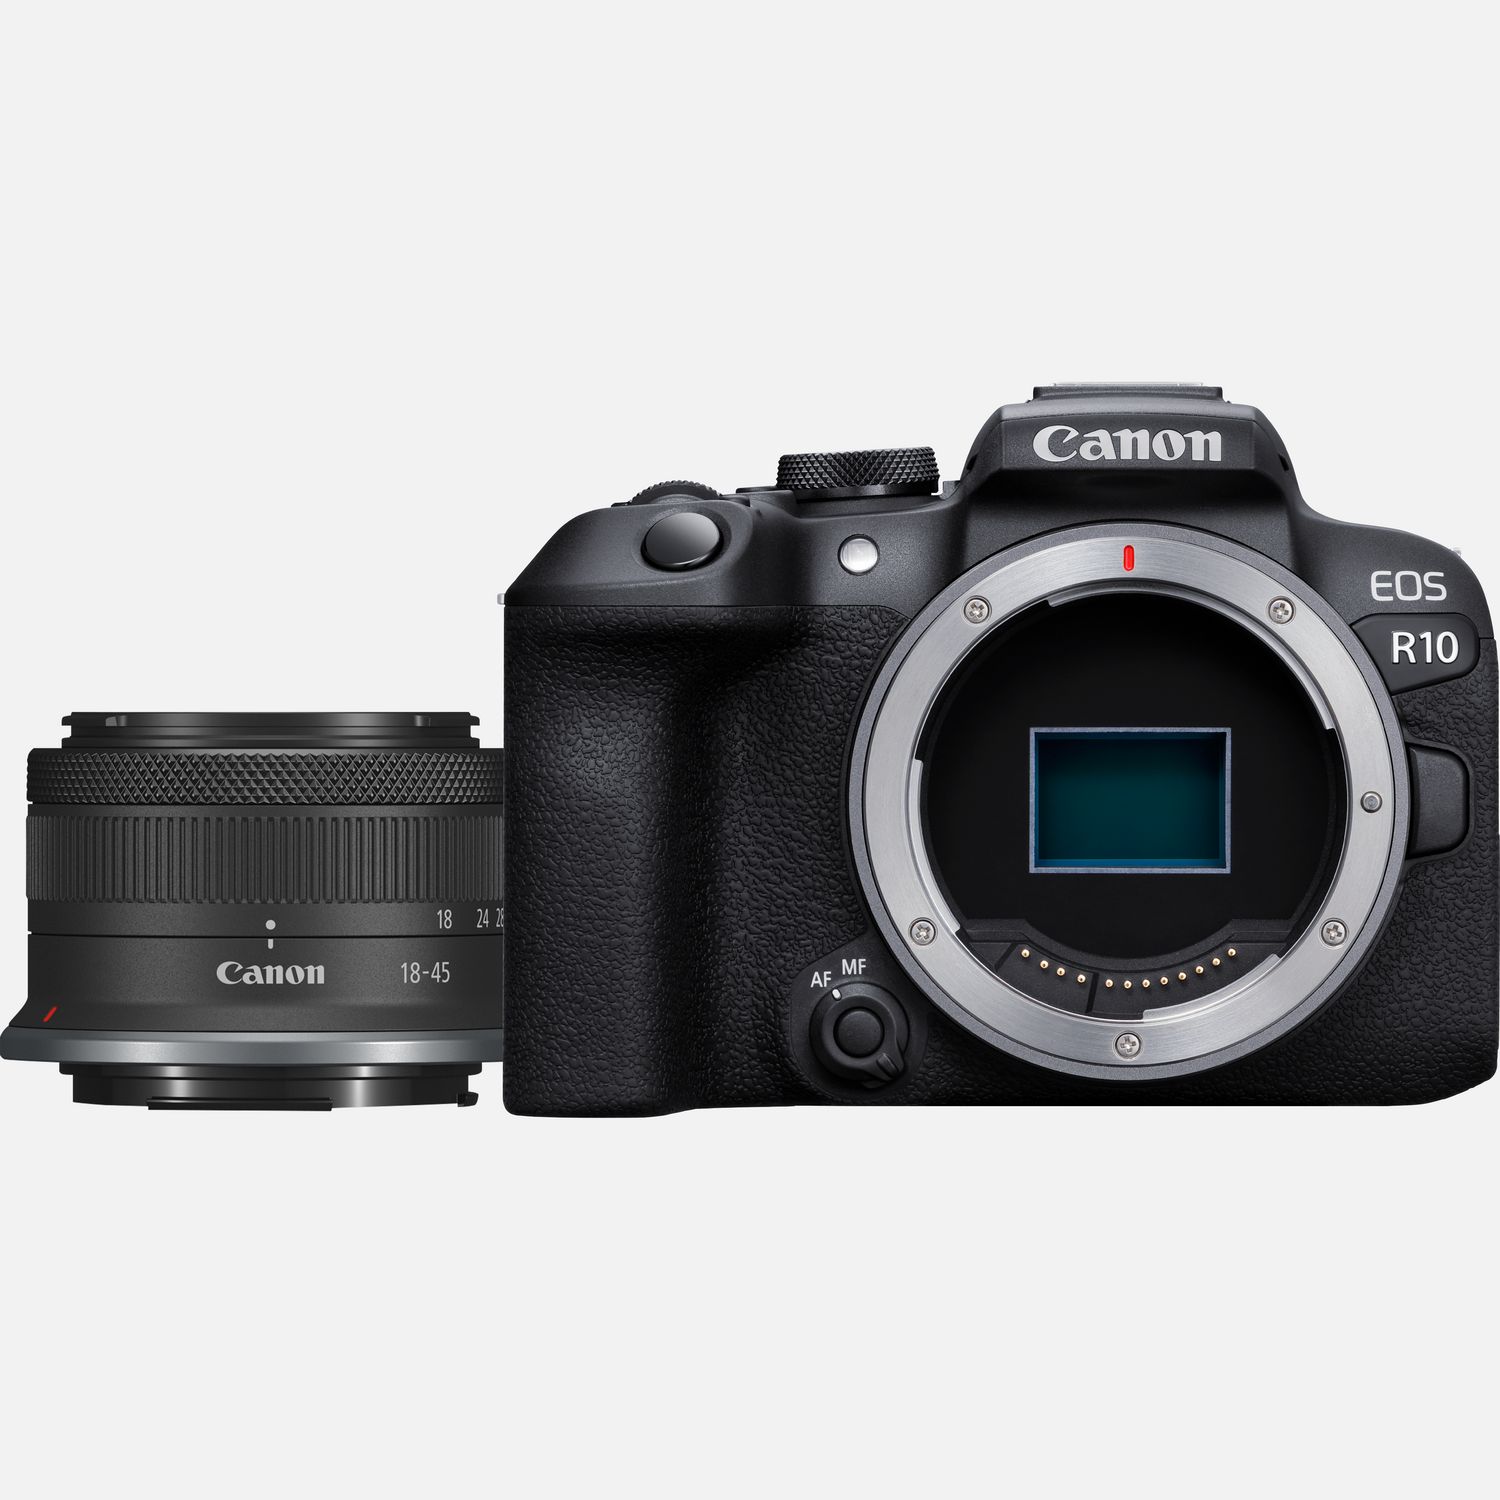 Canon IS Kamera WLAN-Kameras — R10 F4.5-6.3 STM spiegellose EOS in Shop + RF-S Objektiv 18-45mm Schweiz Canon Buy